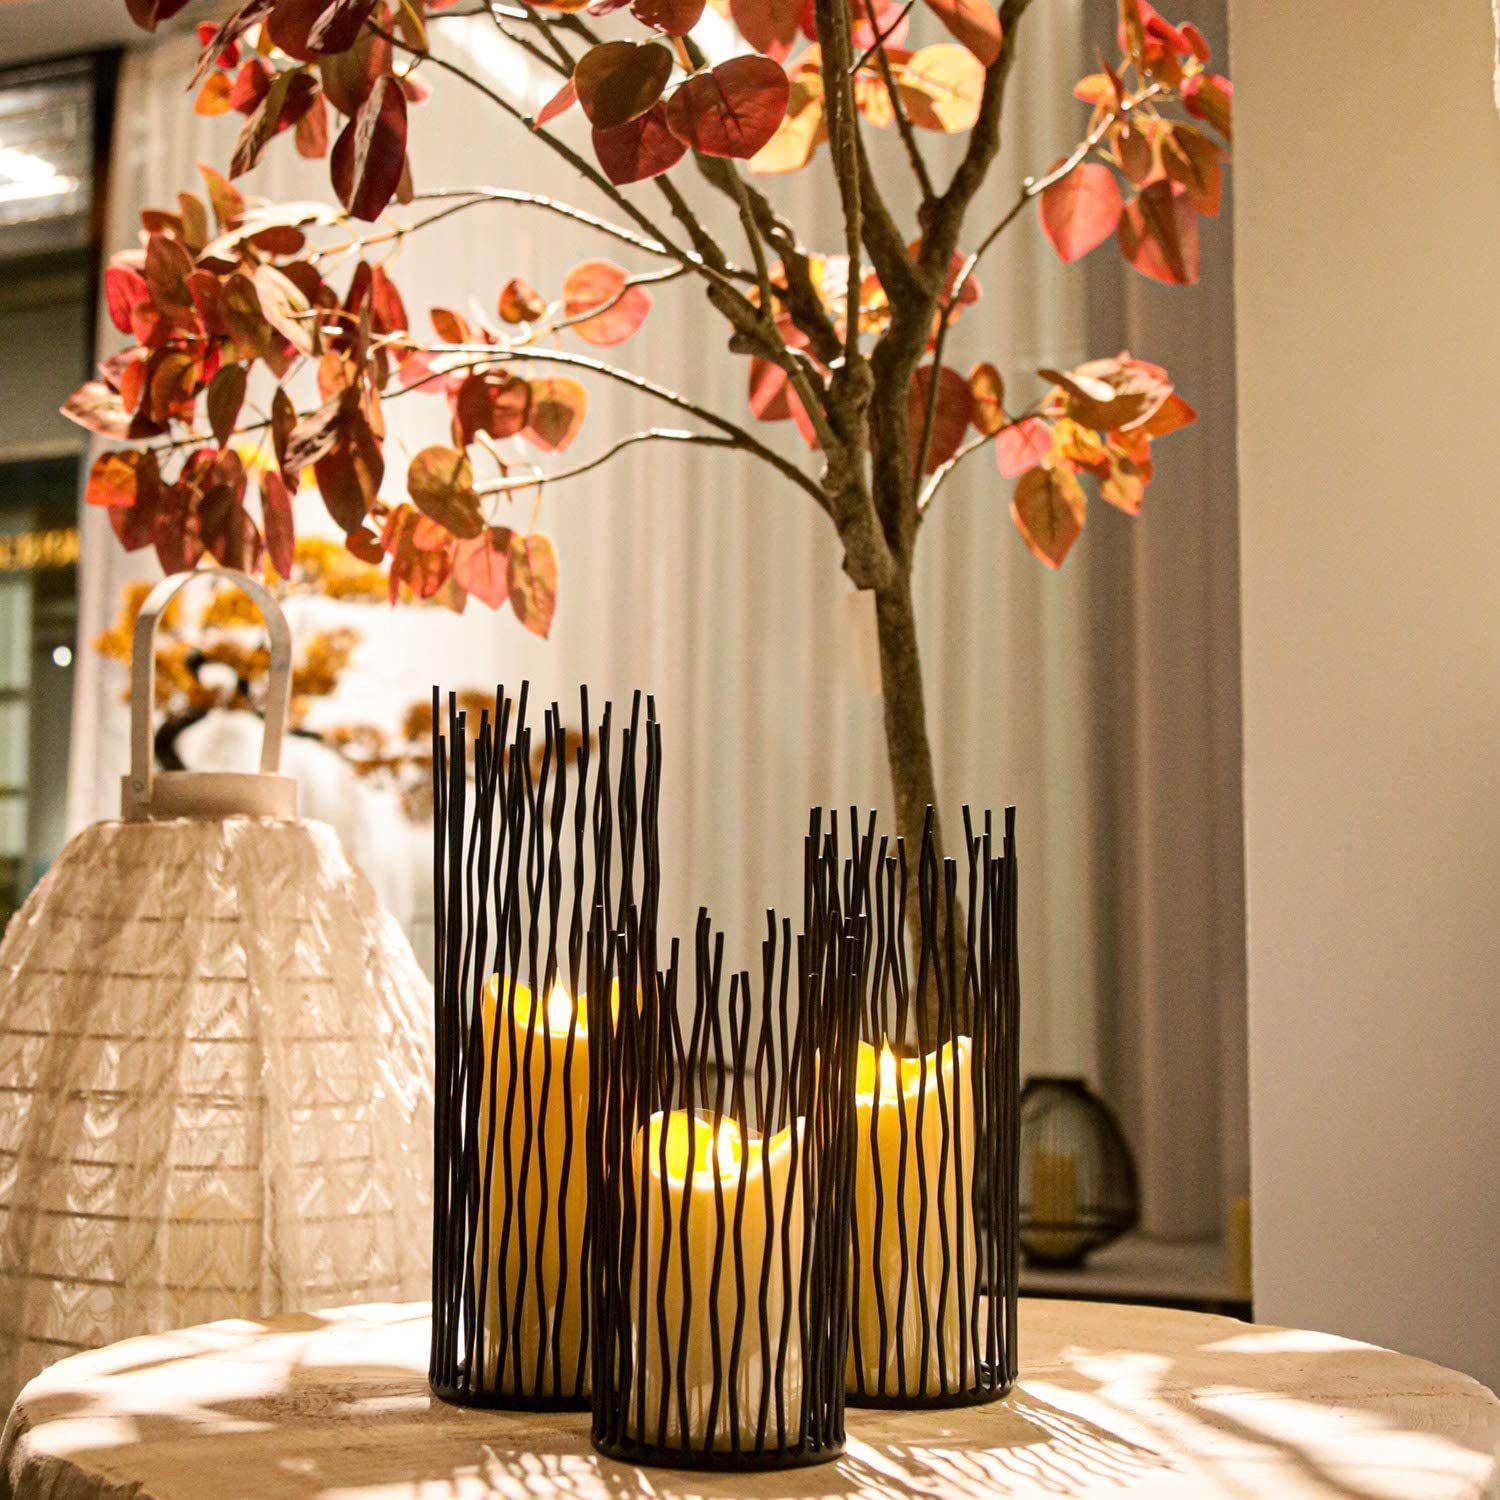 LED und Metall bernstein 3er-Set integriert, Dekorationsleuchten gelblich "Simbas" Kerzen, Tisch- incl. LED technik@all fest Gartenleuchte